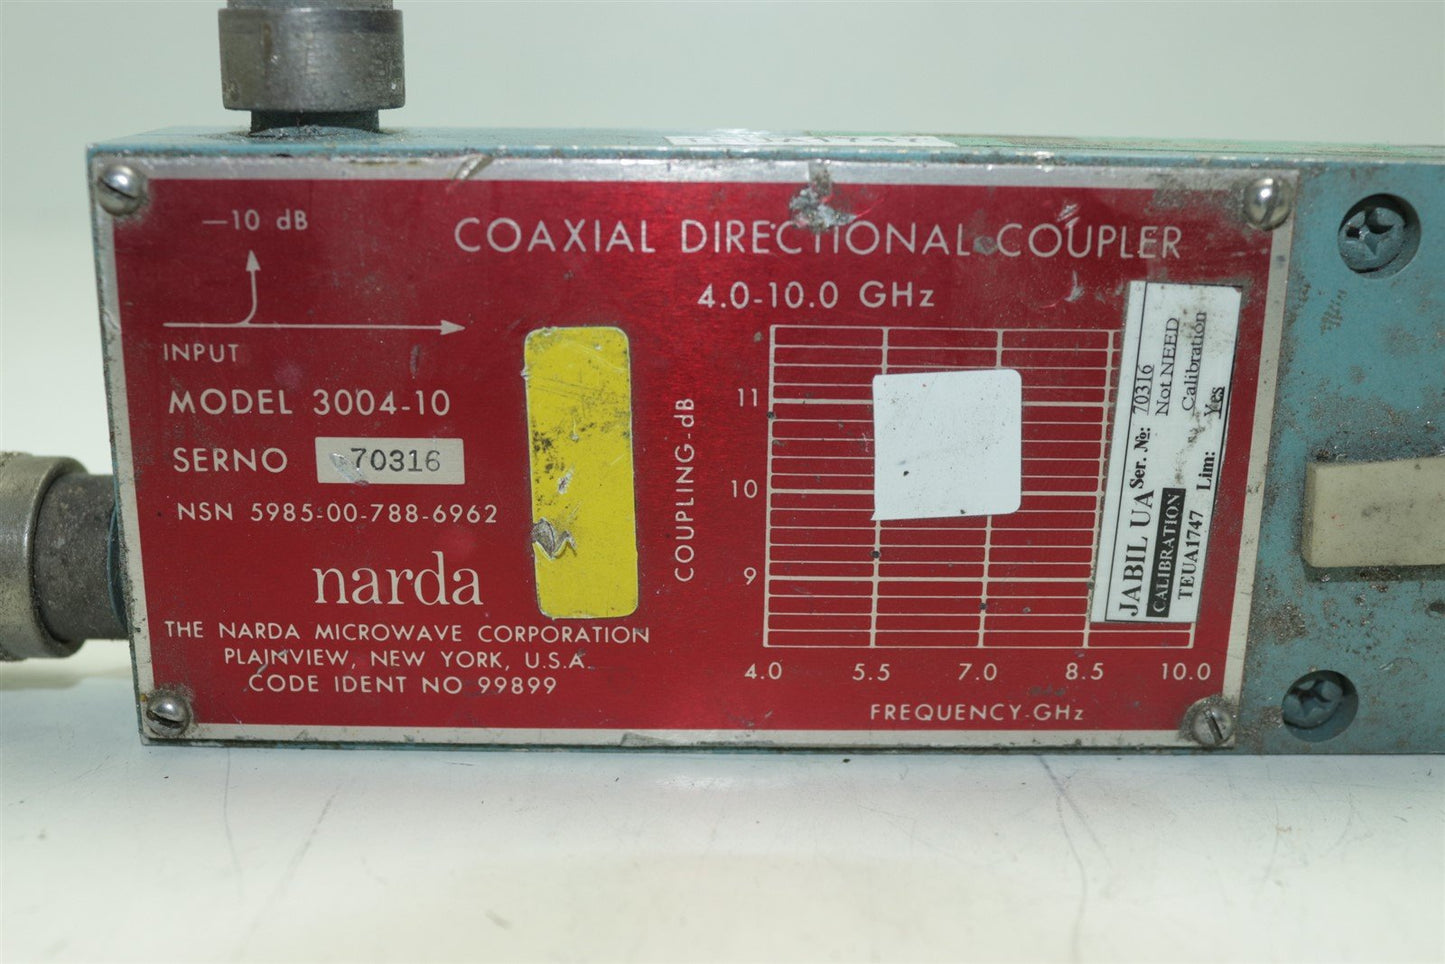 Narda Microwave 3004-10 Coaxial Directional Coupler 4.0 - 10.0 GHz